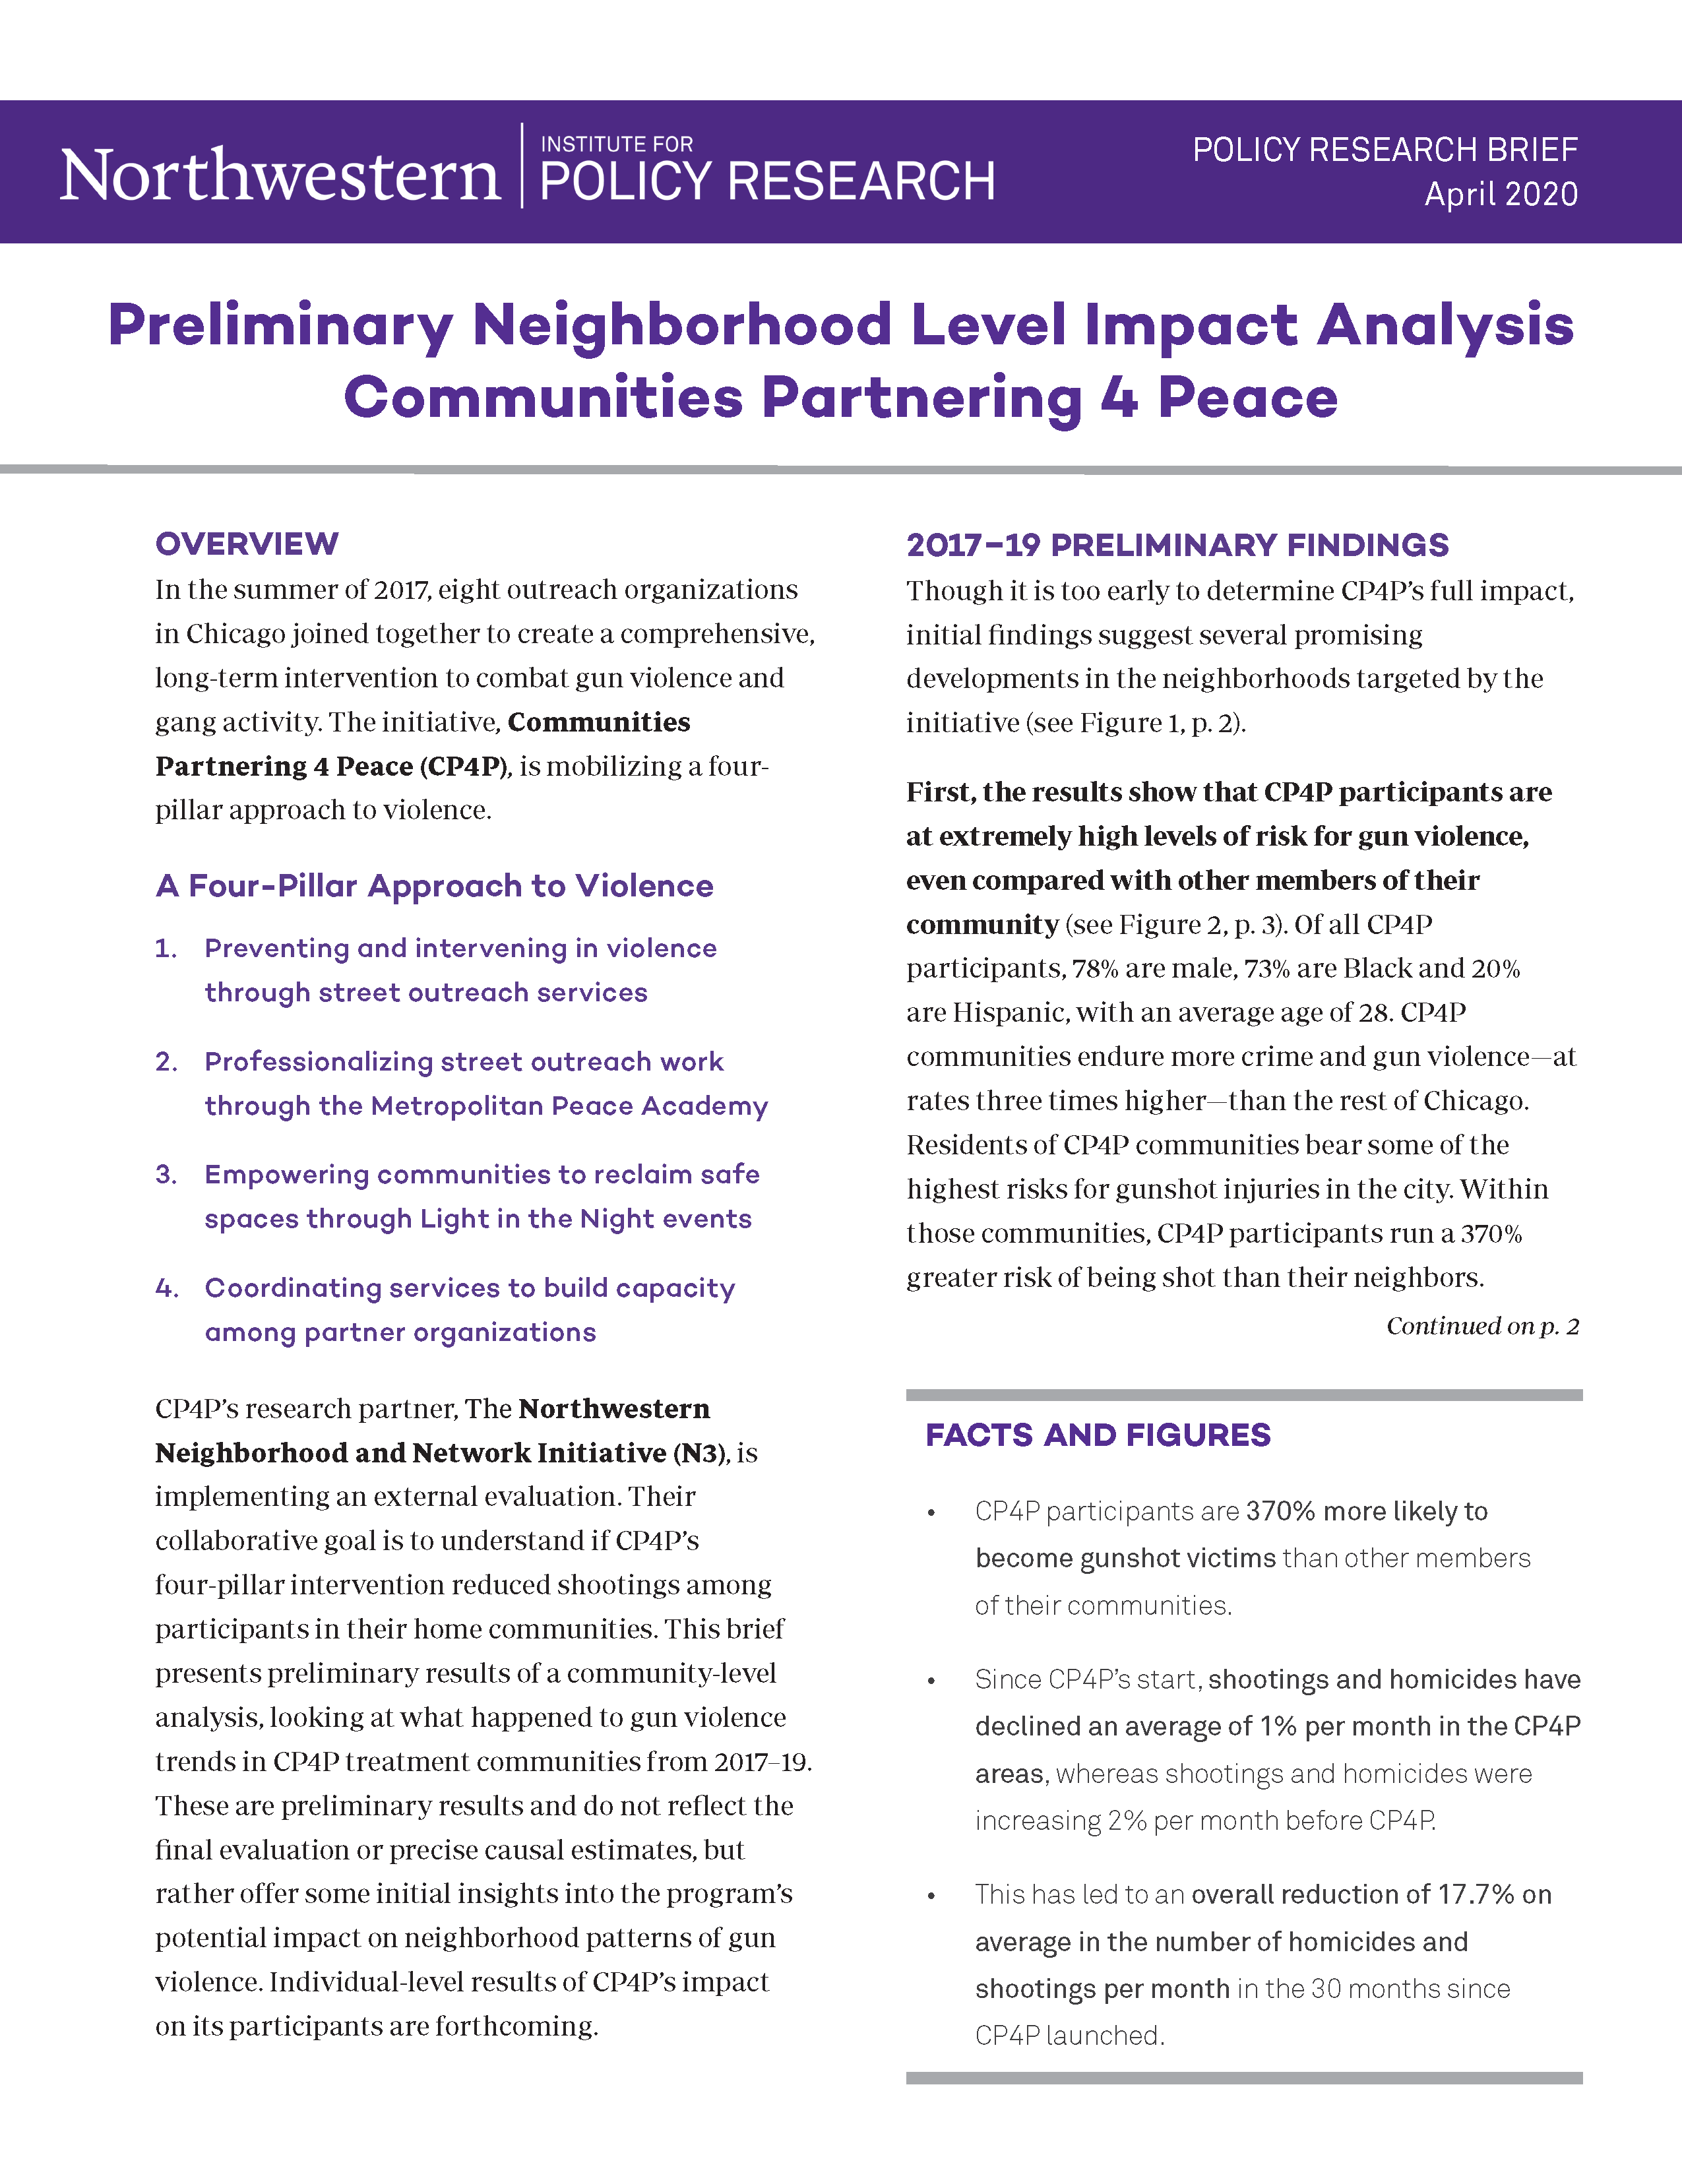 Preliminary Neighborhood Level Impact Analysis Communities Partnering 4 Peace